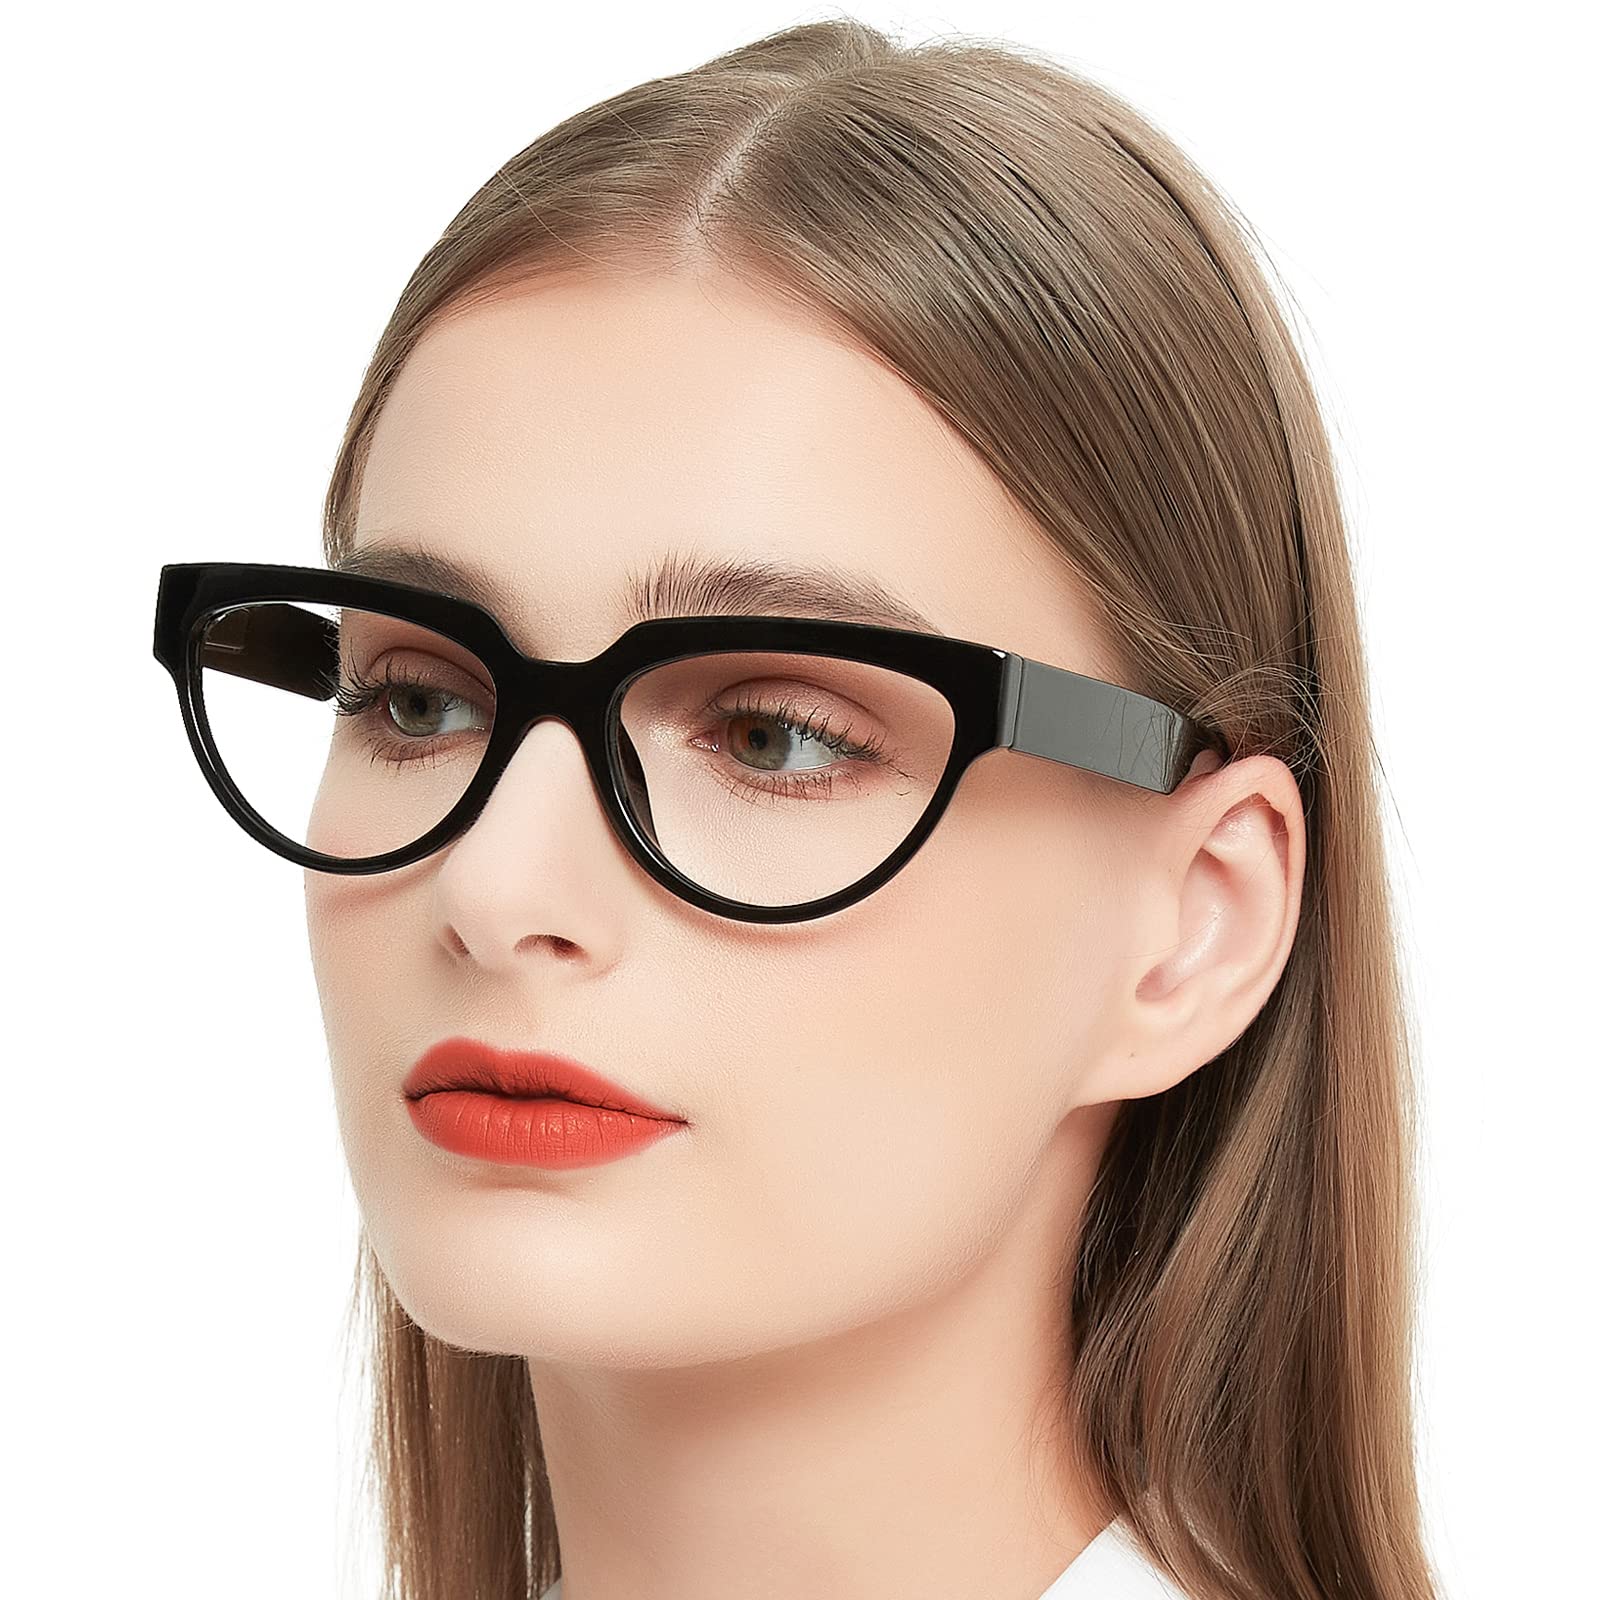 OCCI Chiari Reading Glasses for Women Cat Eye Fashion Reader Sunglasses, Demi / 2.5